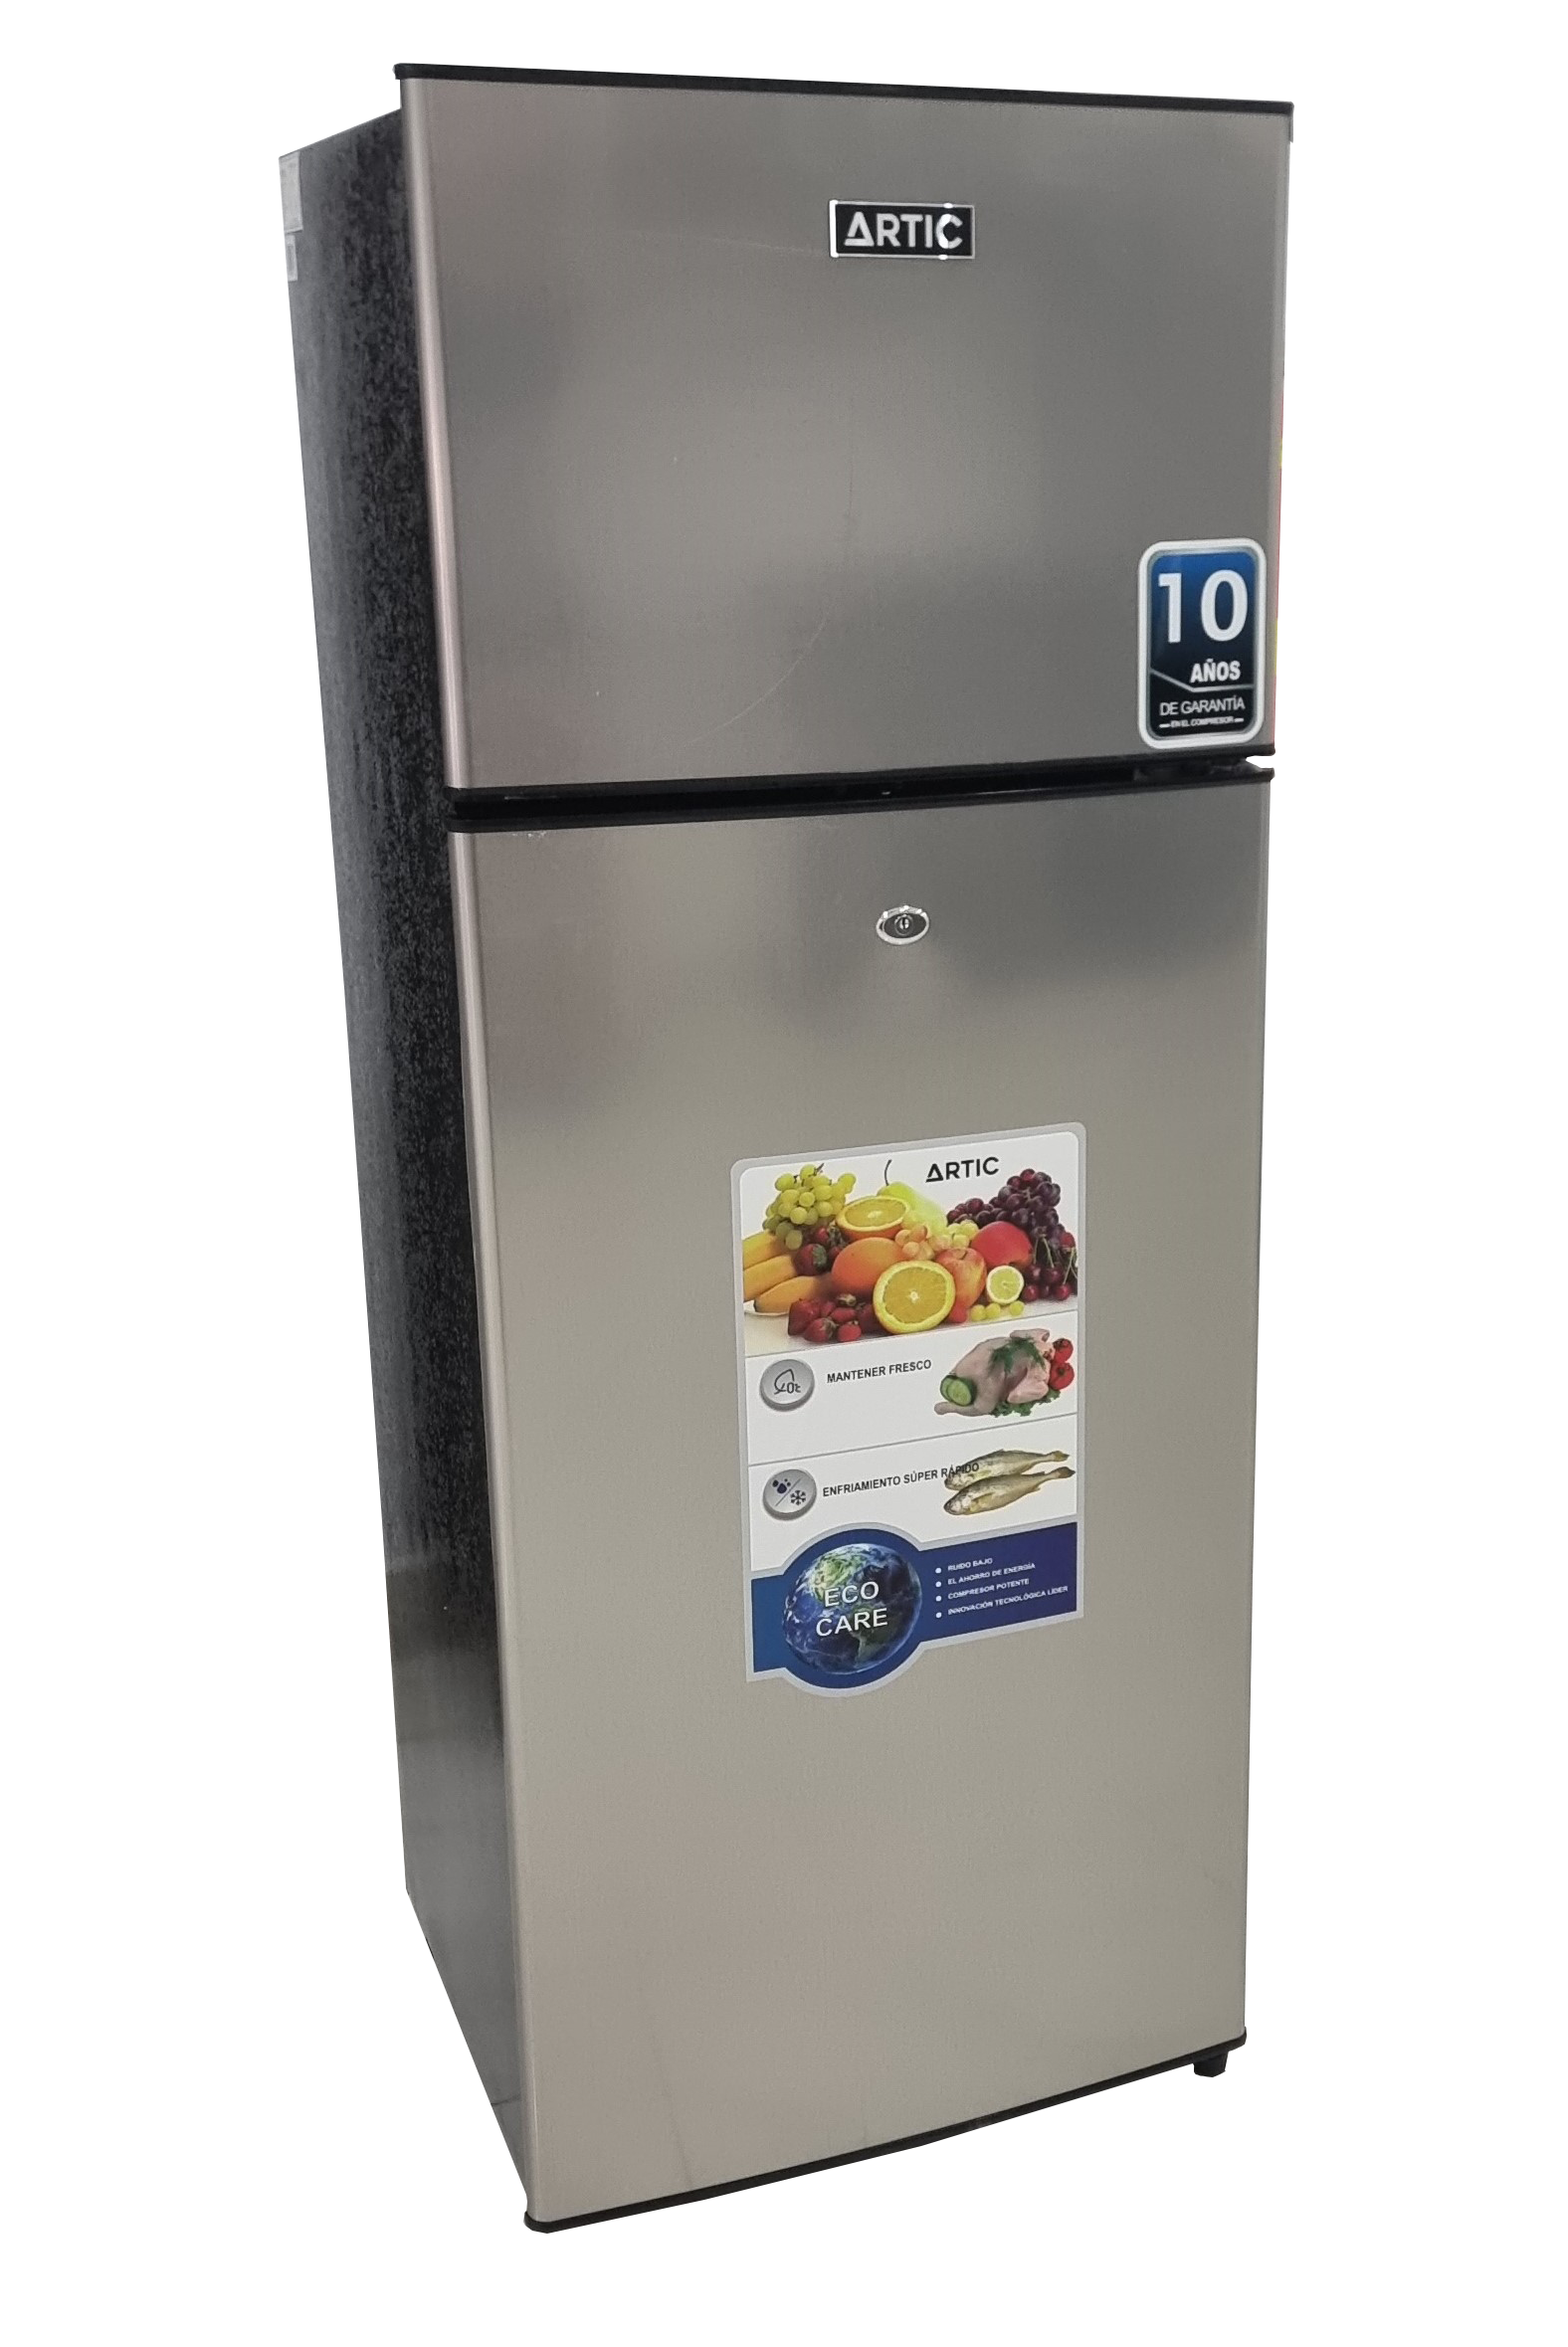 Refrigerador Artic 8 pies / 210 litros